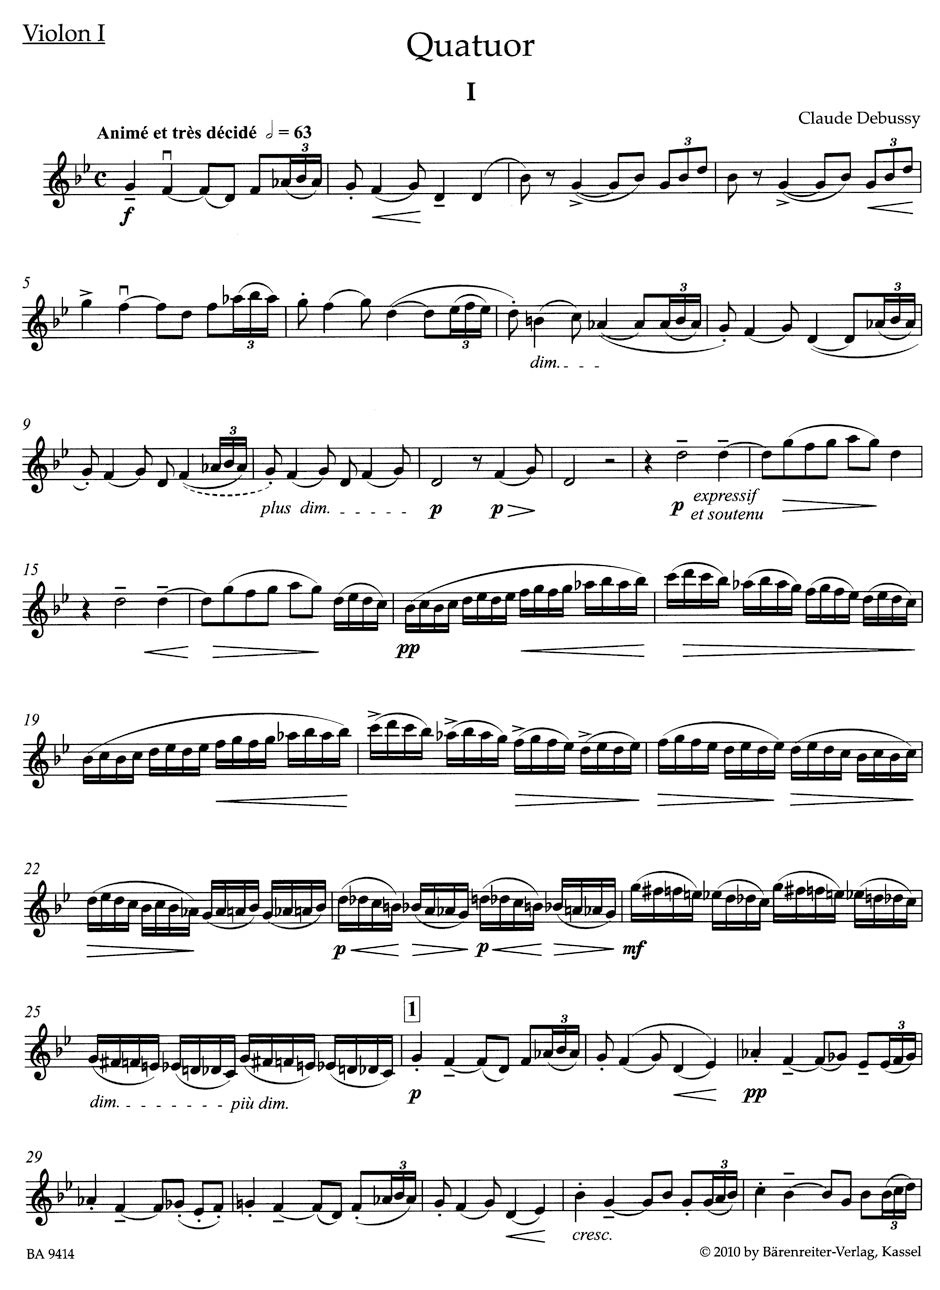 Debussy String Quartet Opus 10